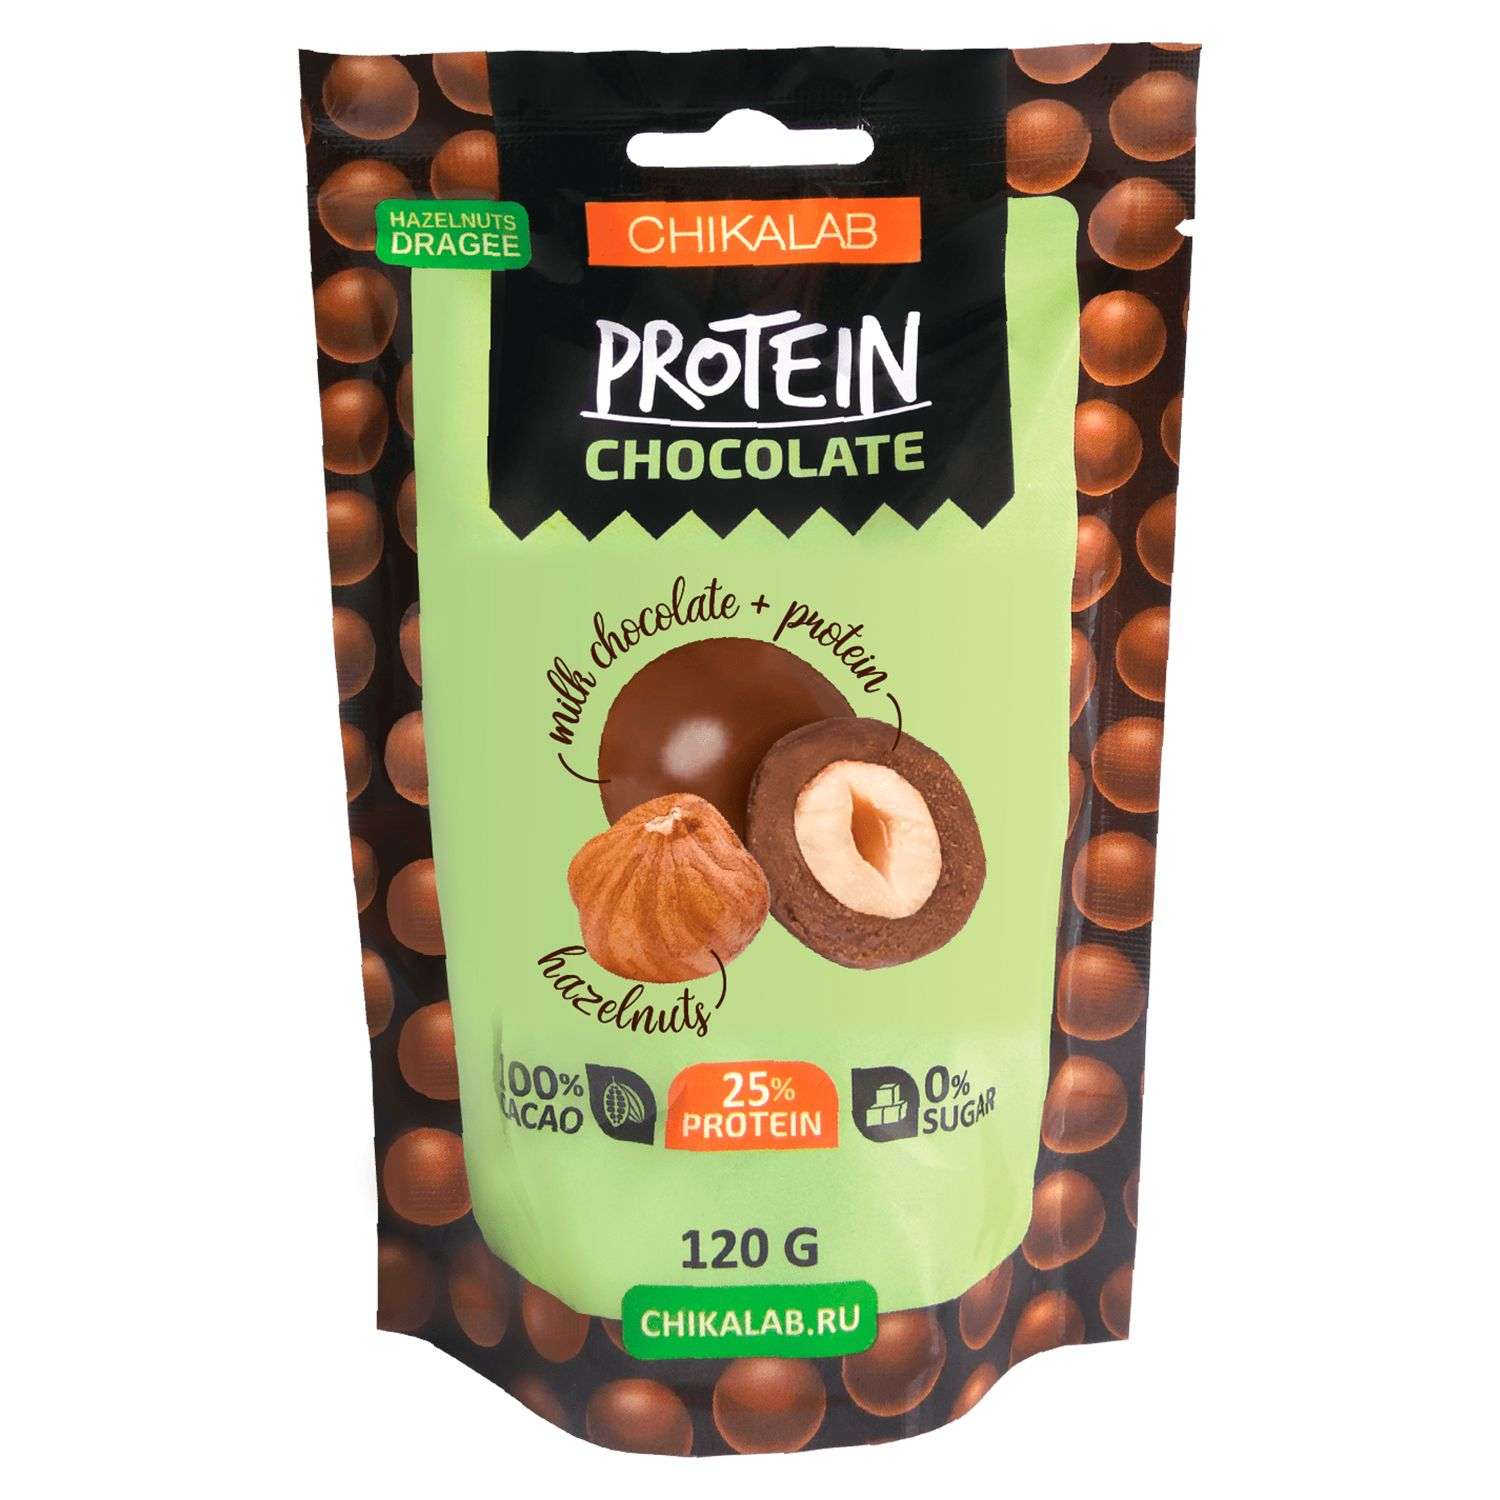 Драже Chikalab протеиновое фундук в шоколаде 120г - фото 1